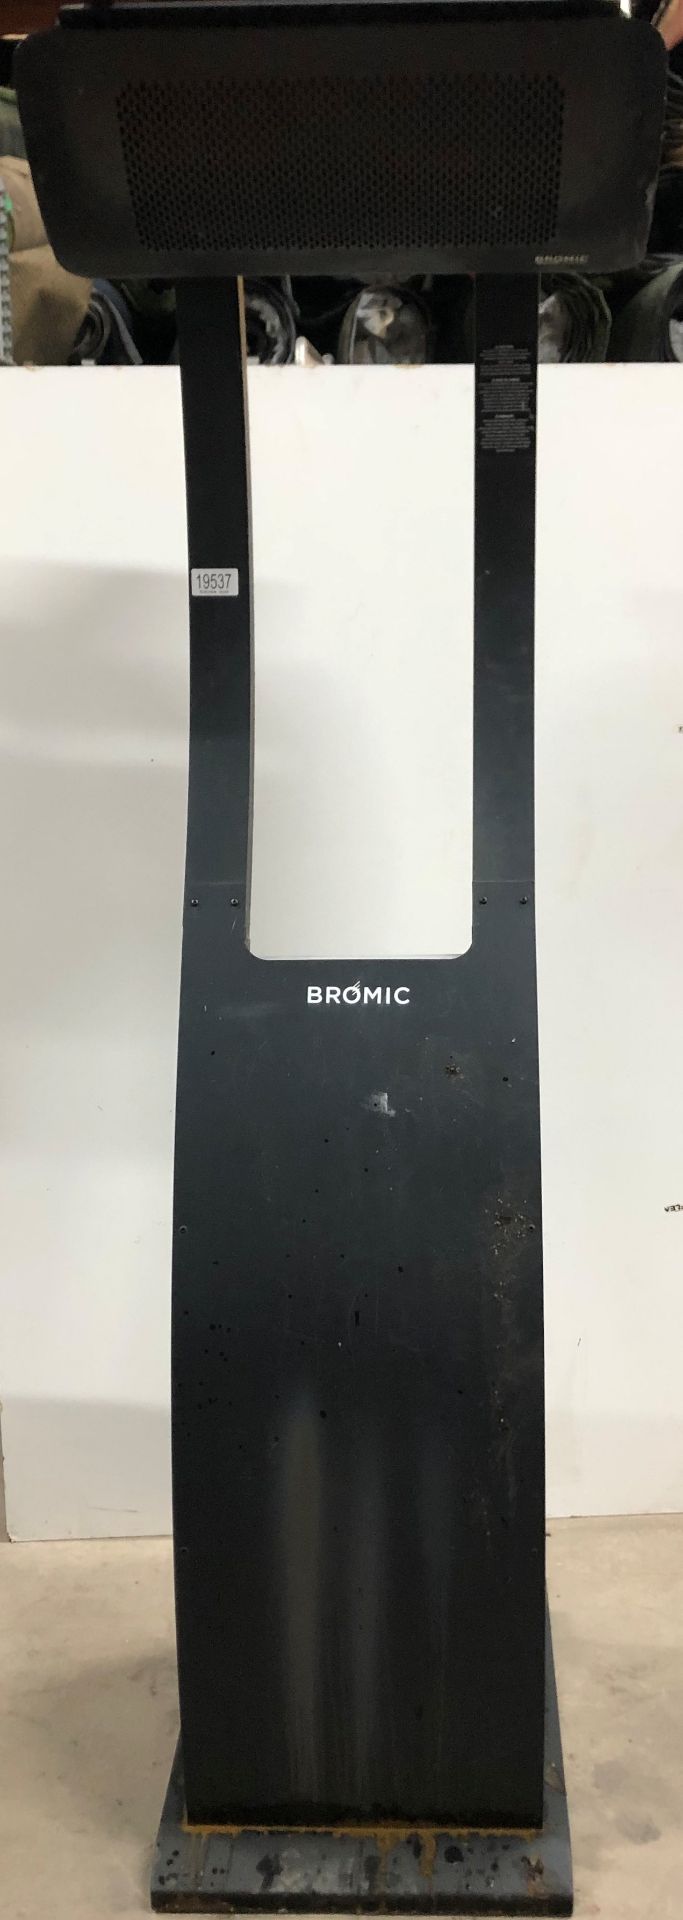 Bromic tungsten smart heat portable propane heater - Image 2 of 4